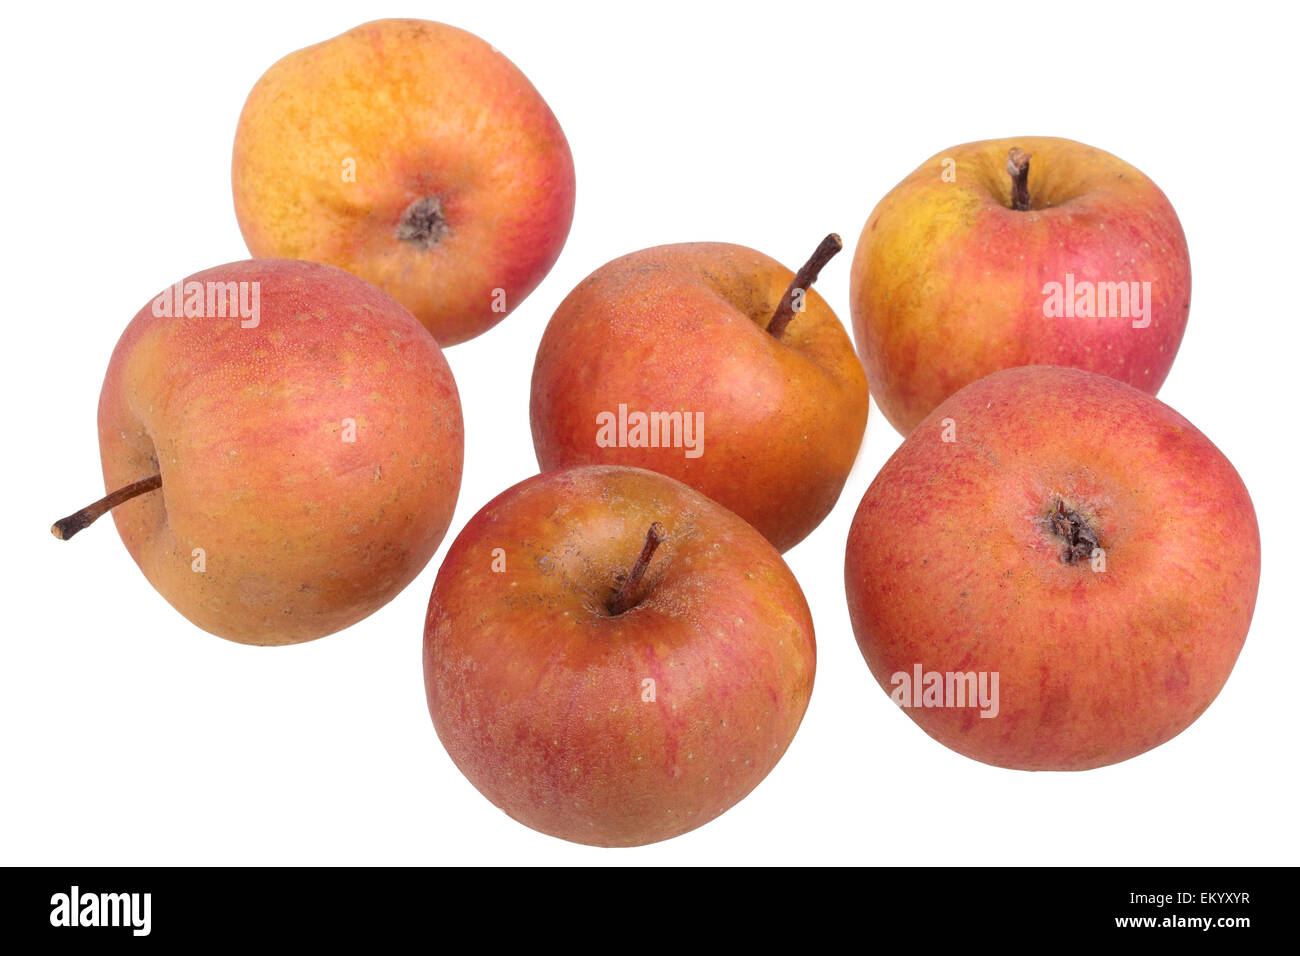 Apfel Sorte Strauwald Pearmain Stockfoto